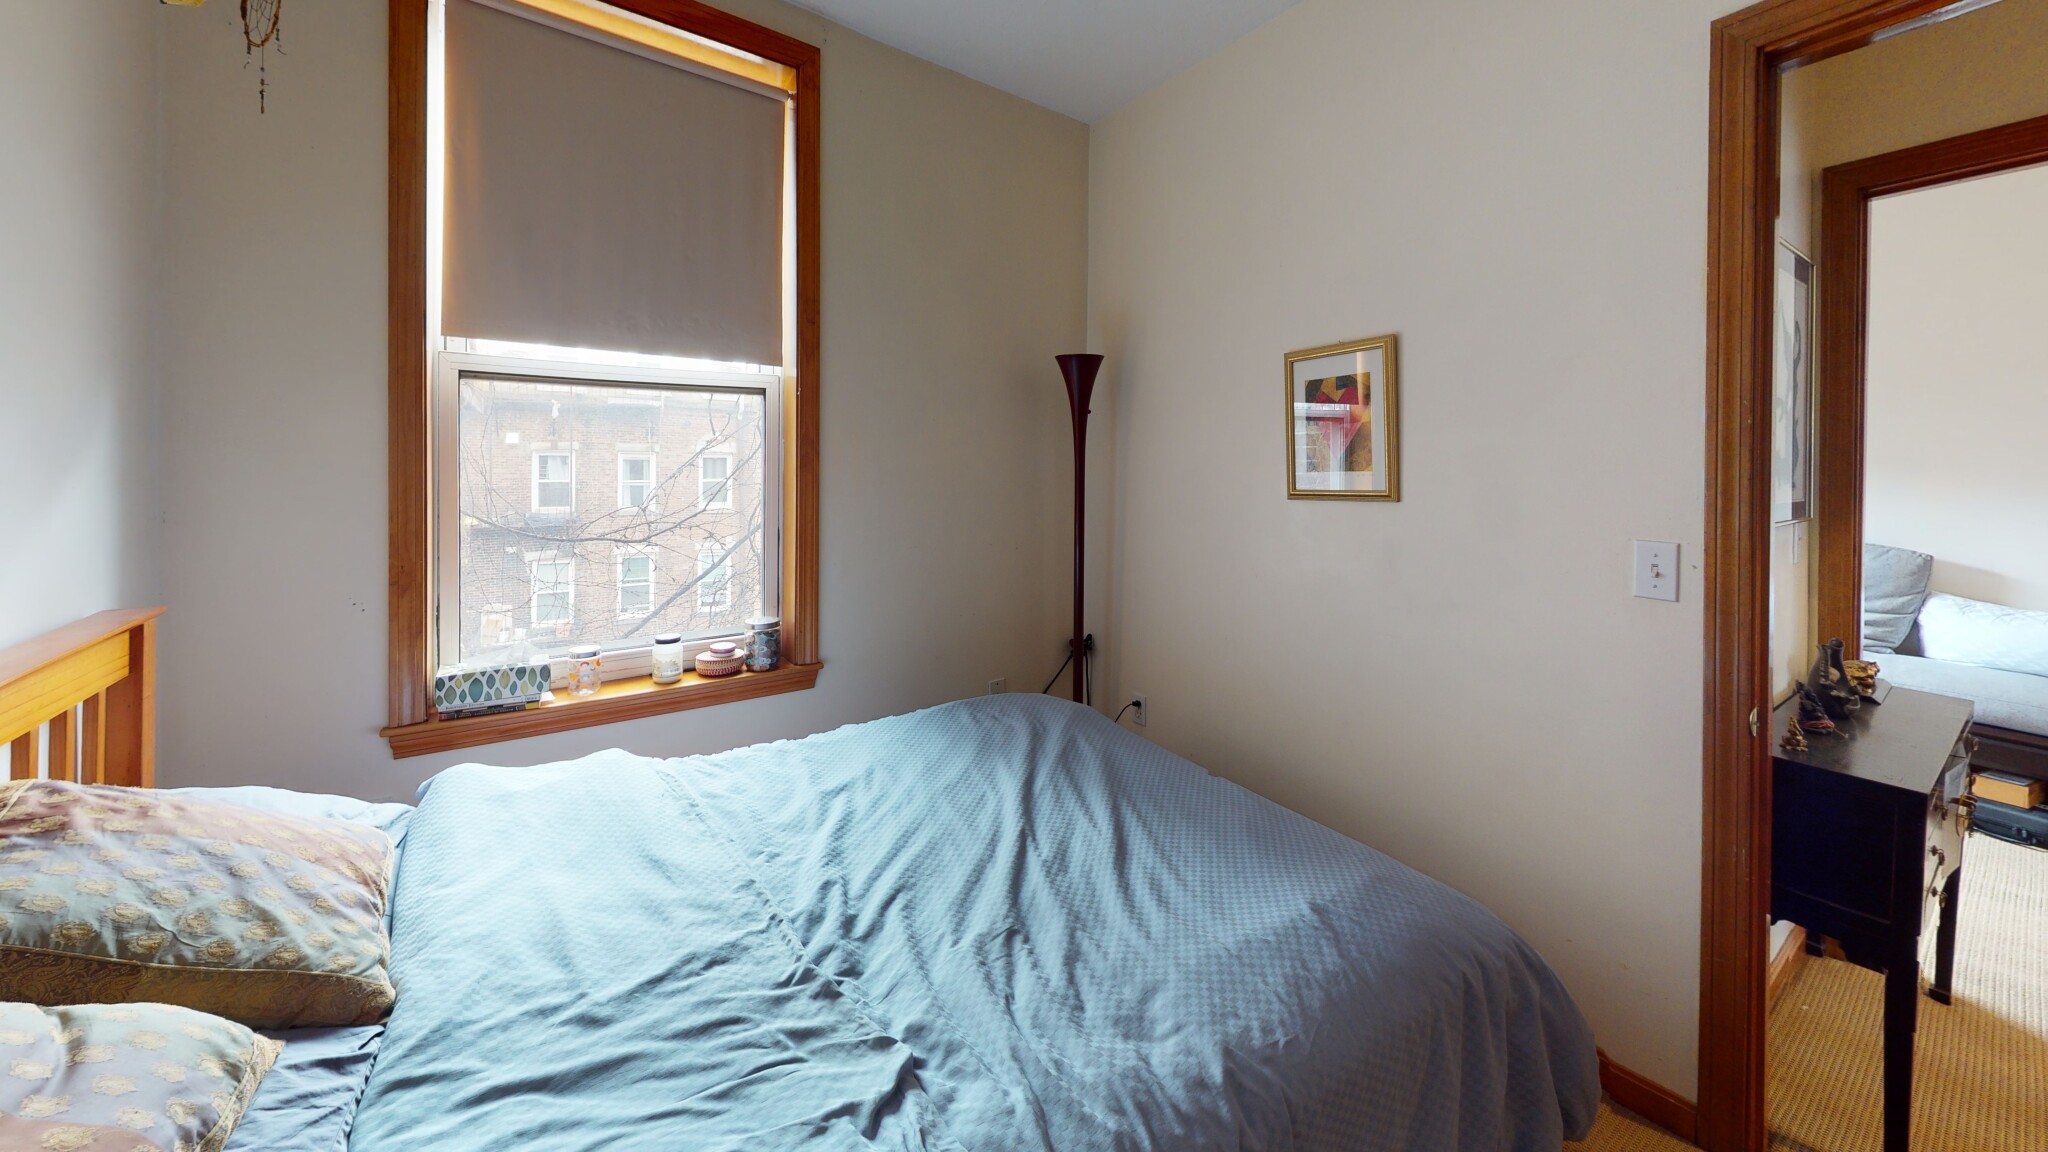 Photos of apartment on Hudson St.,Boston MA 02111